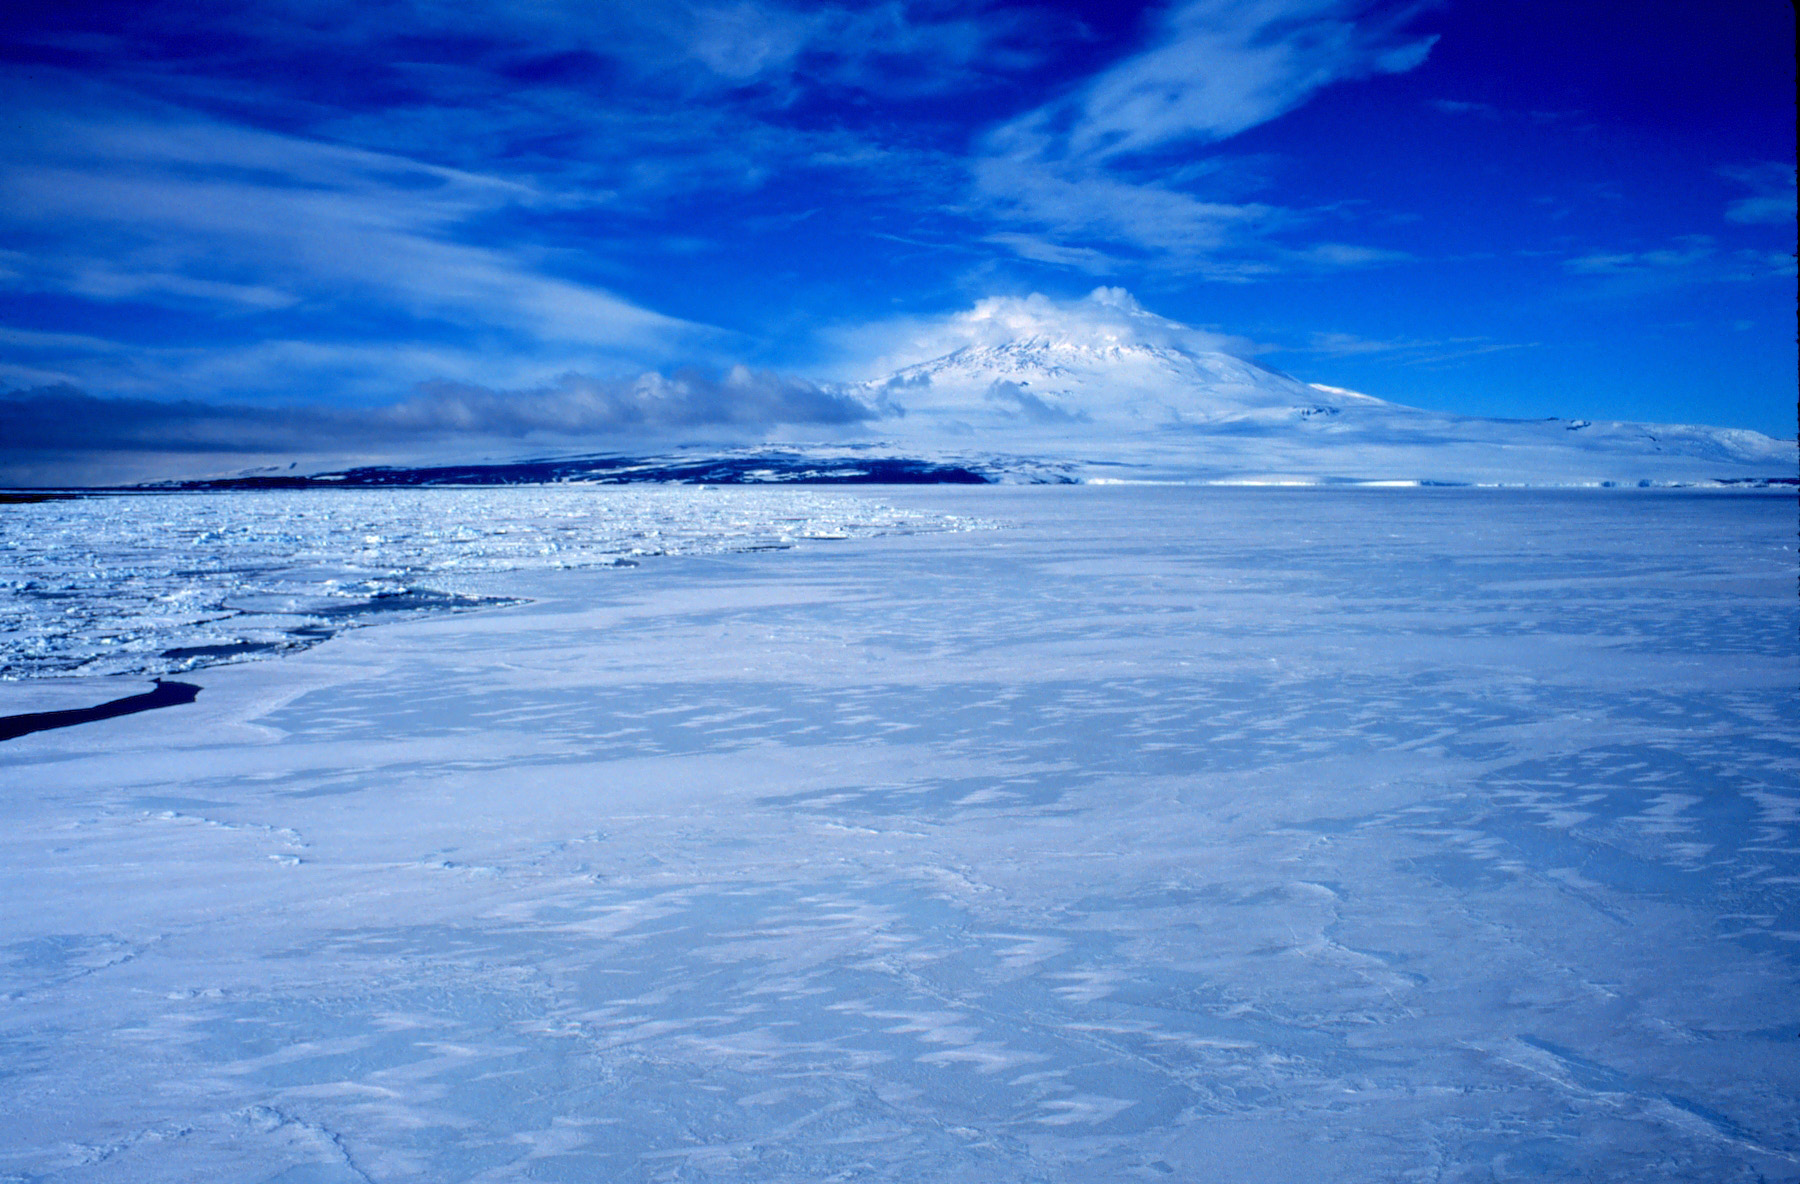 Mount Erebus in Antarctica image - Free stock photo ...